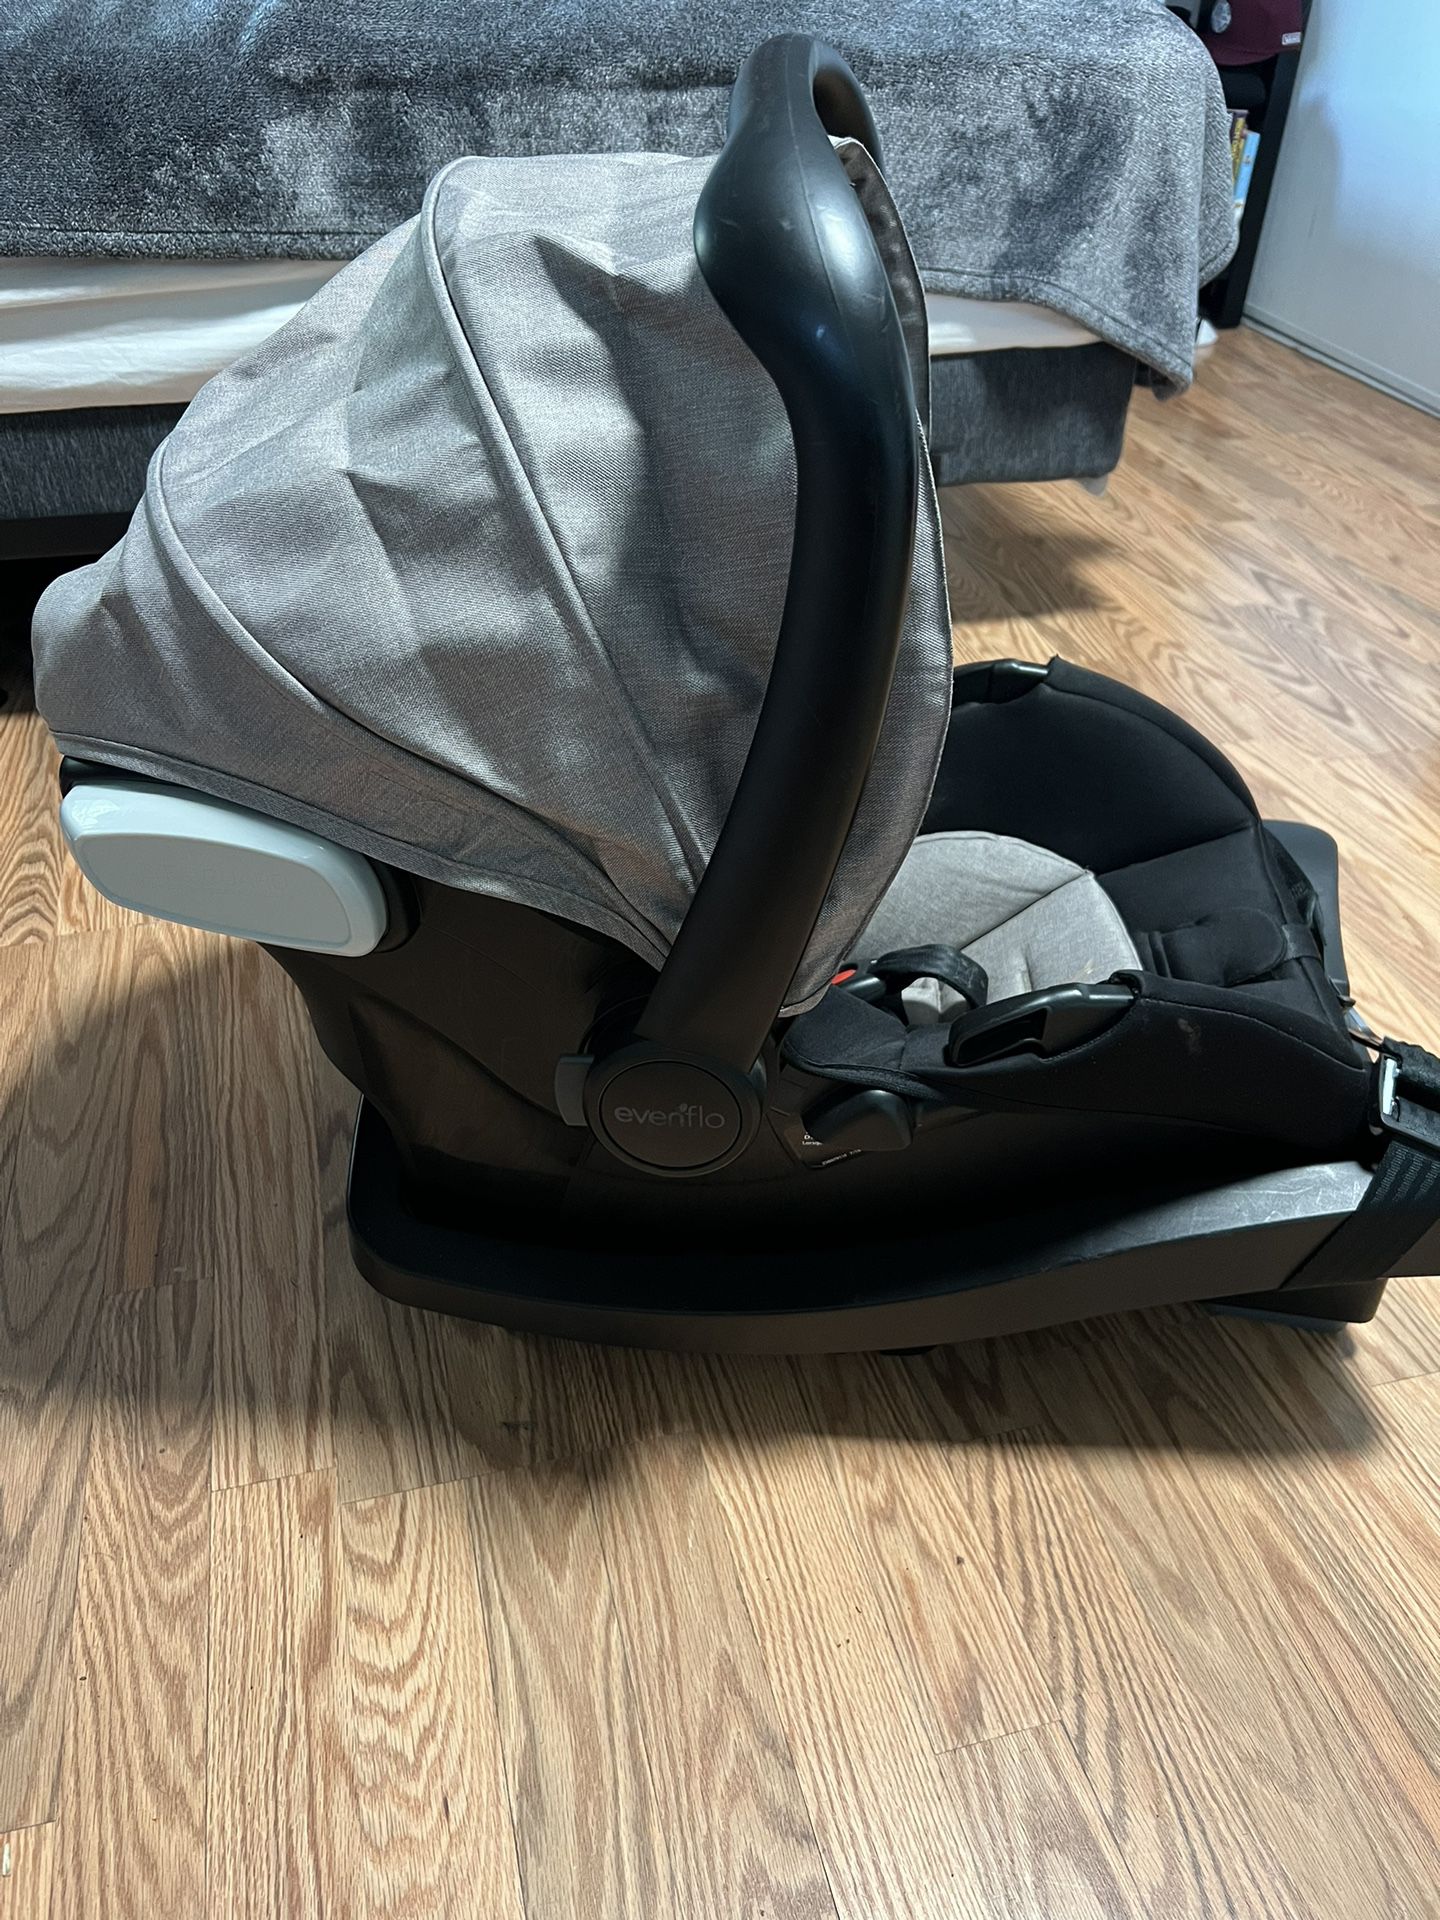 Evenflo Baby Car Seat 